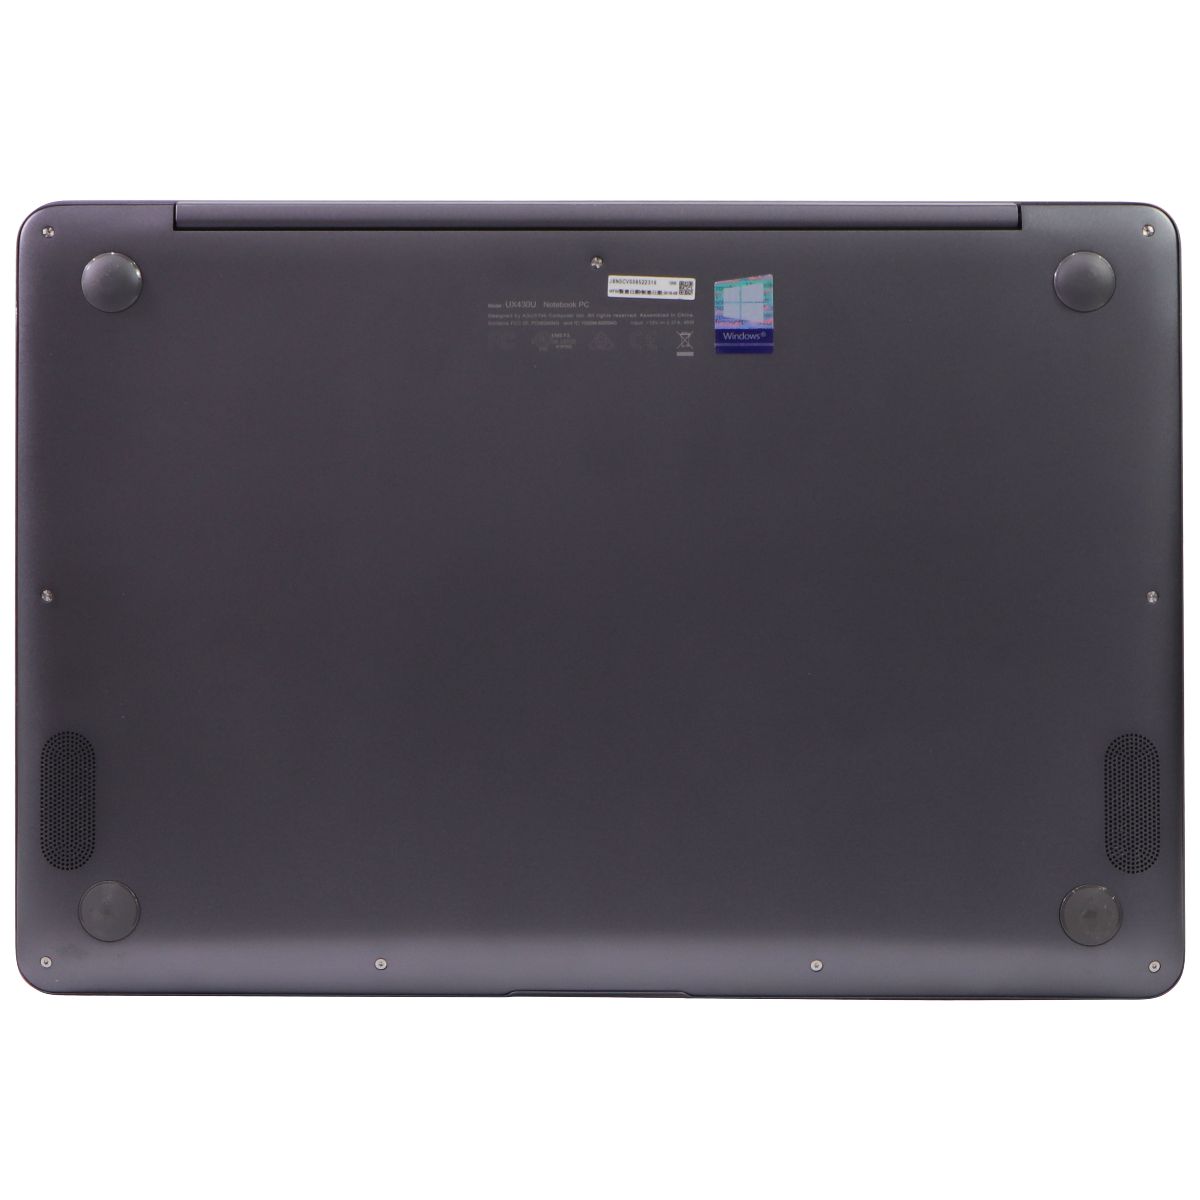 ASUS Zenbook (14-inch) Laptop i7-8550U/16GB RAM/512GB SSD - Quartz Grey (UX430V) Laptops - PC Laptops & Netbooks ASUS    - Simple Cell Bulk Wholesale Pricing - USA Seller